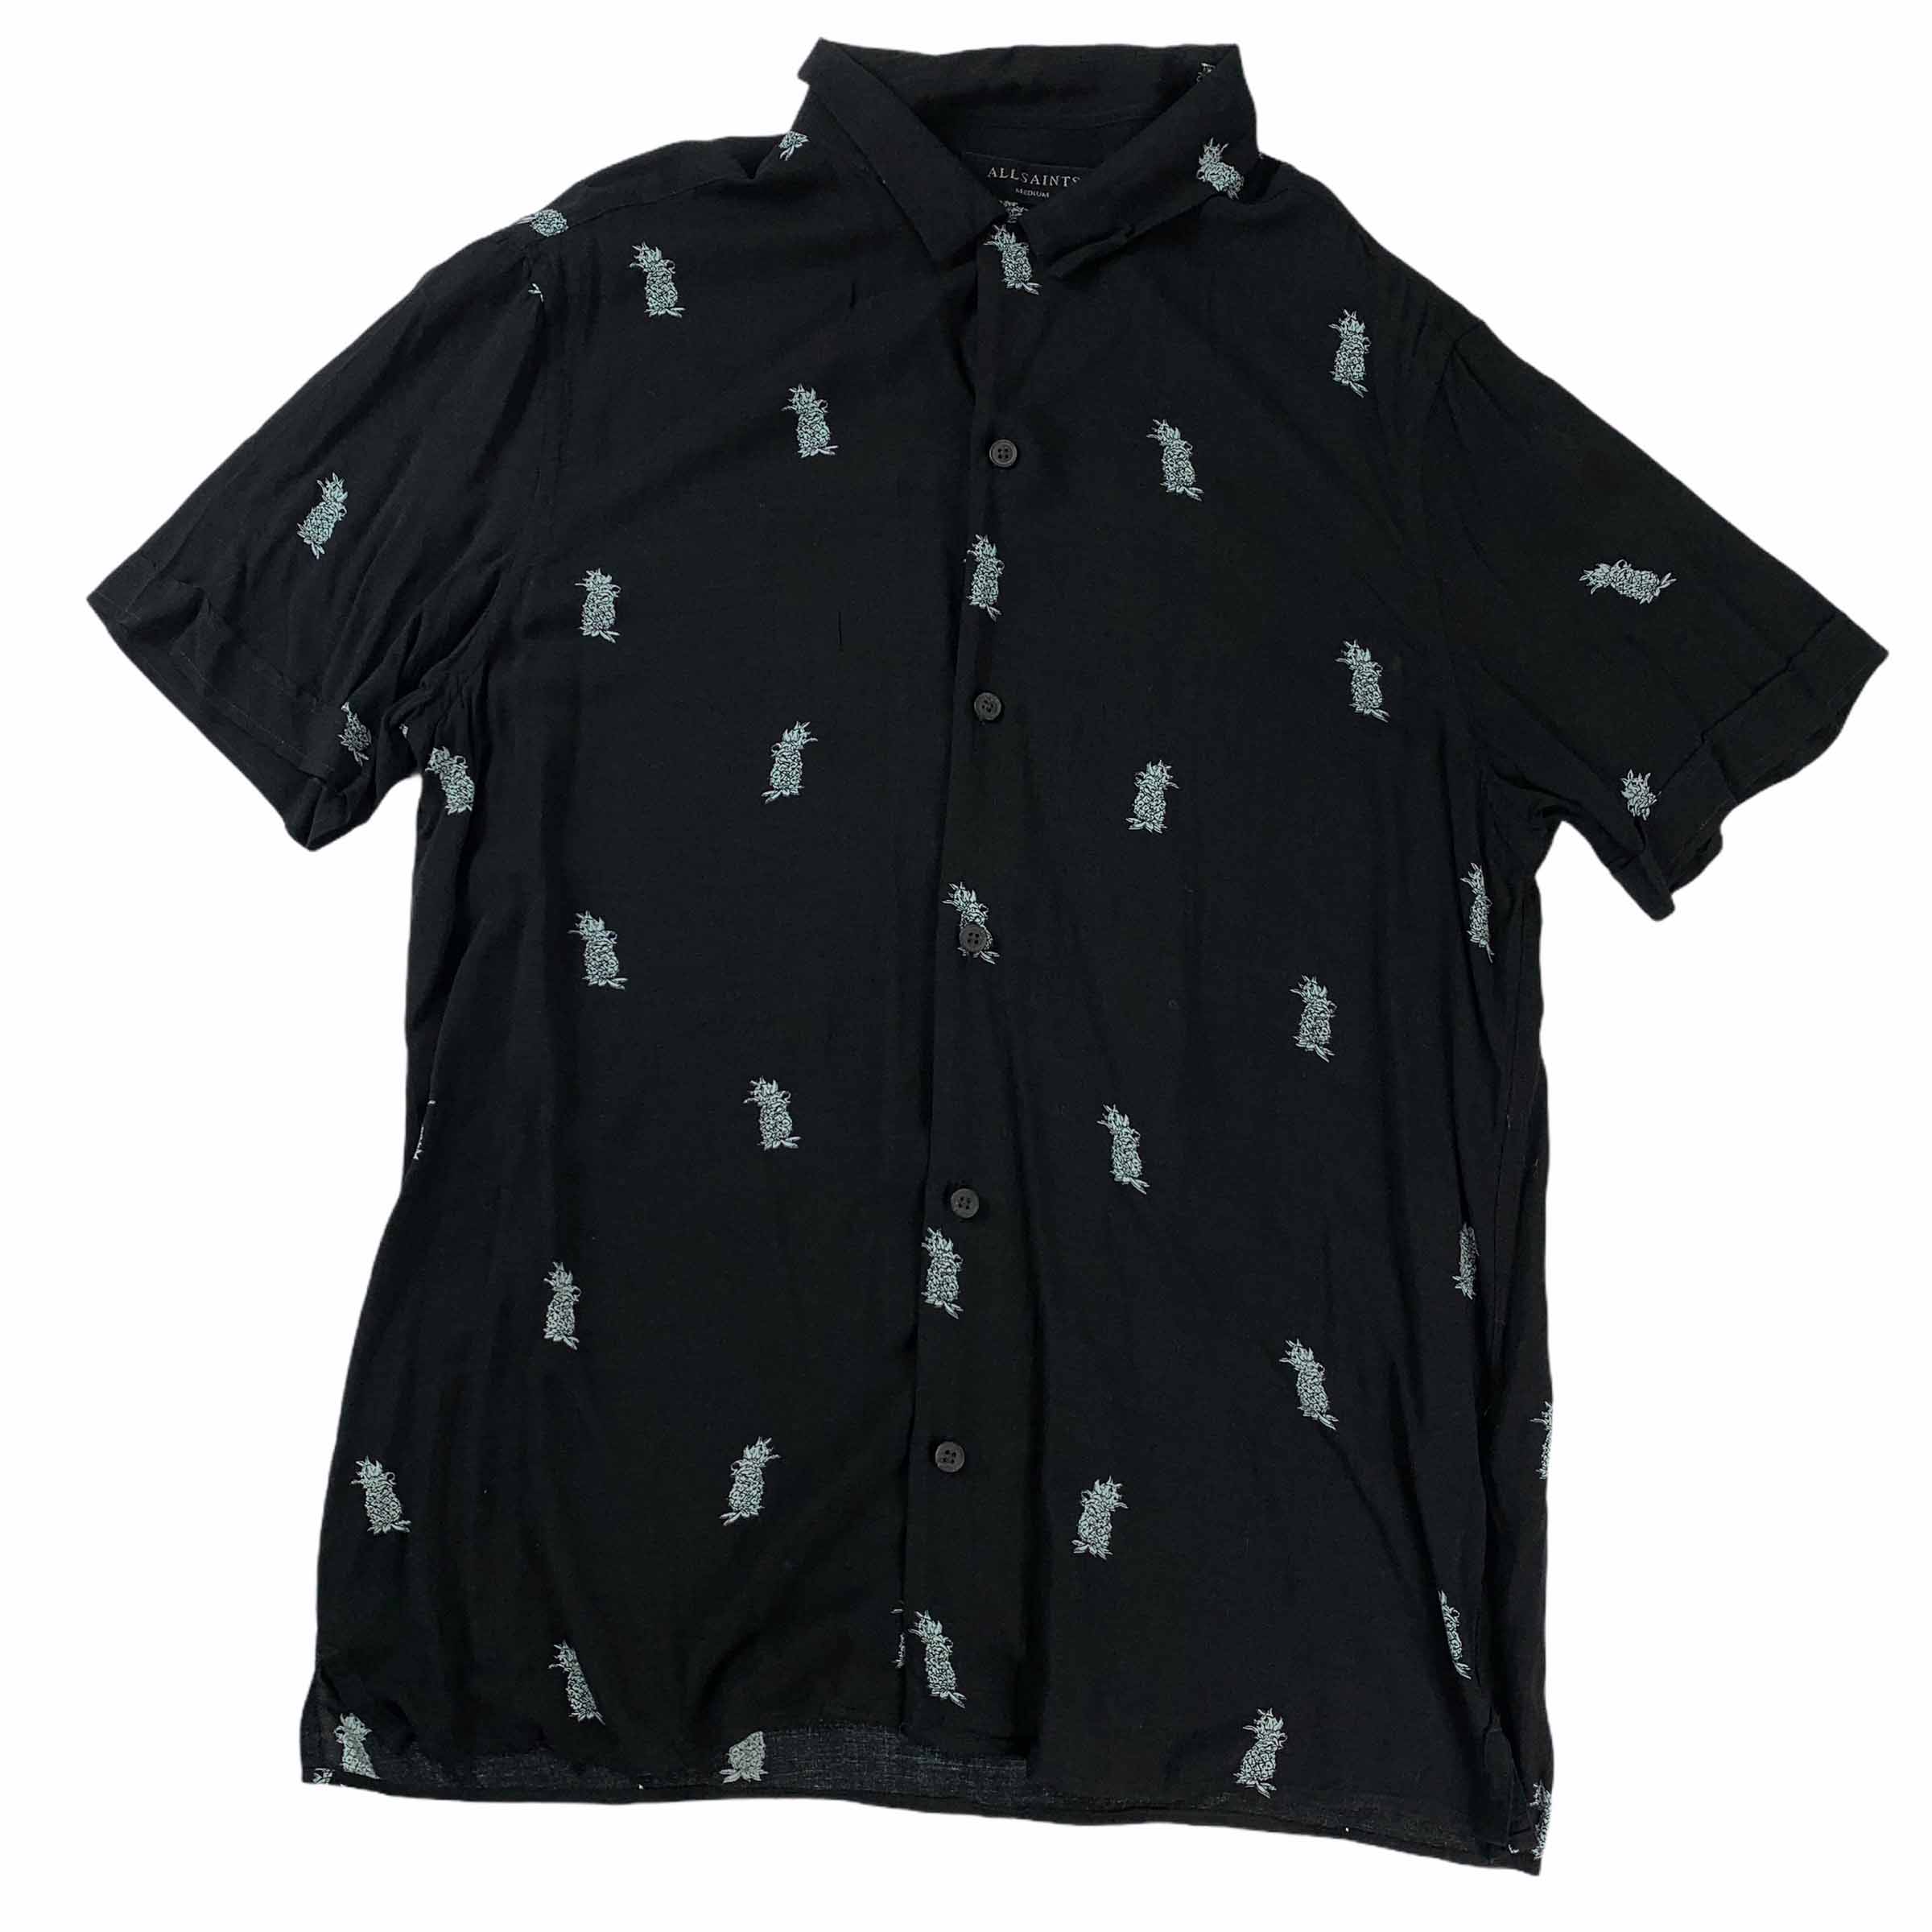 [All Saints] Pineapple Short Sleeve Shirt BK - Size M